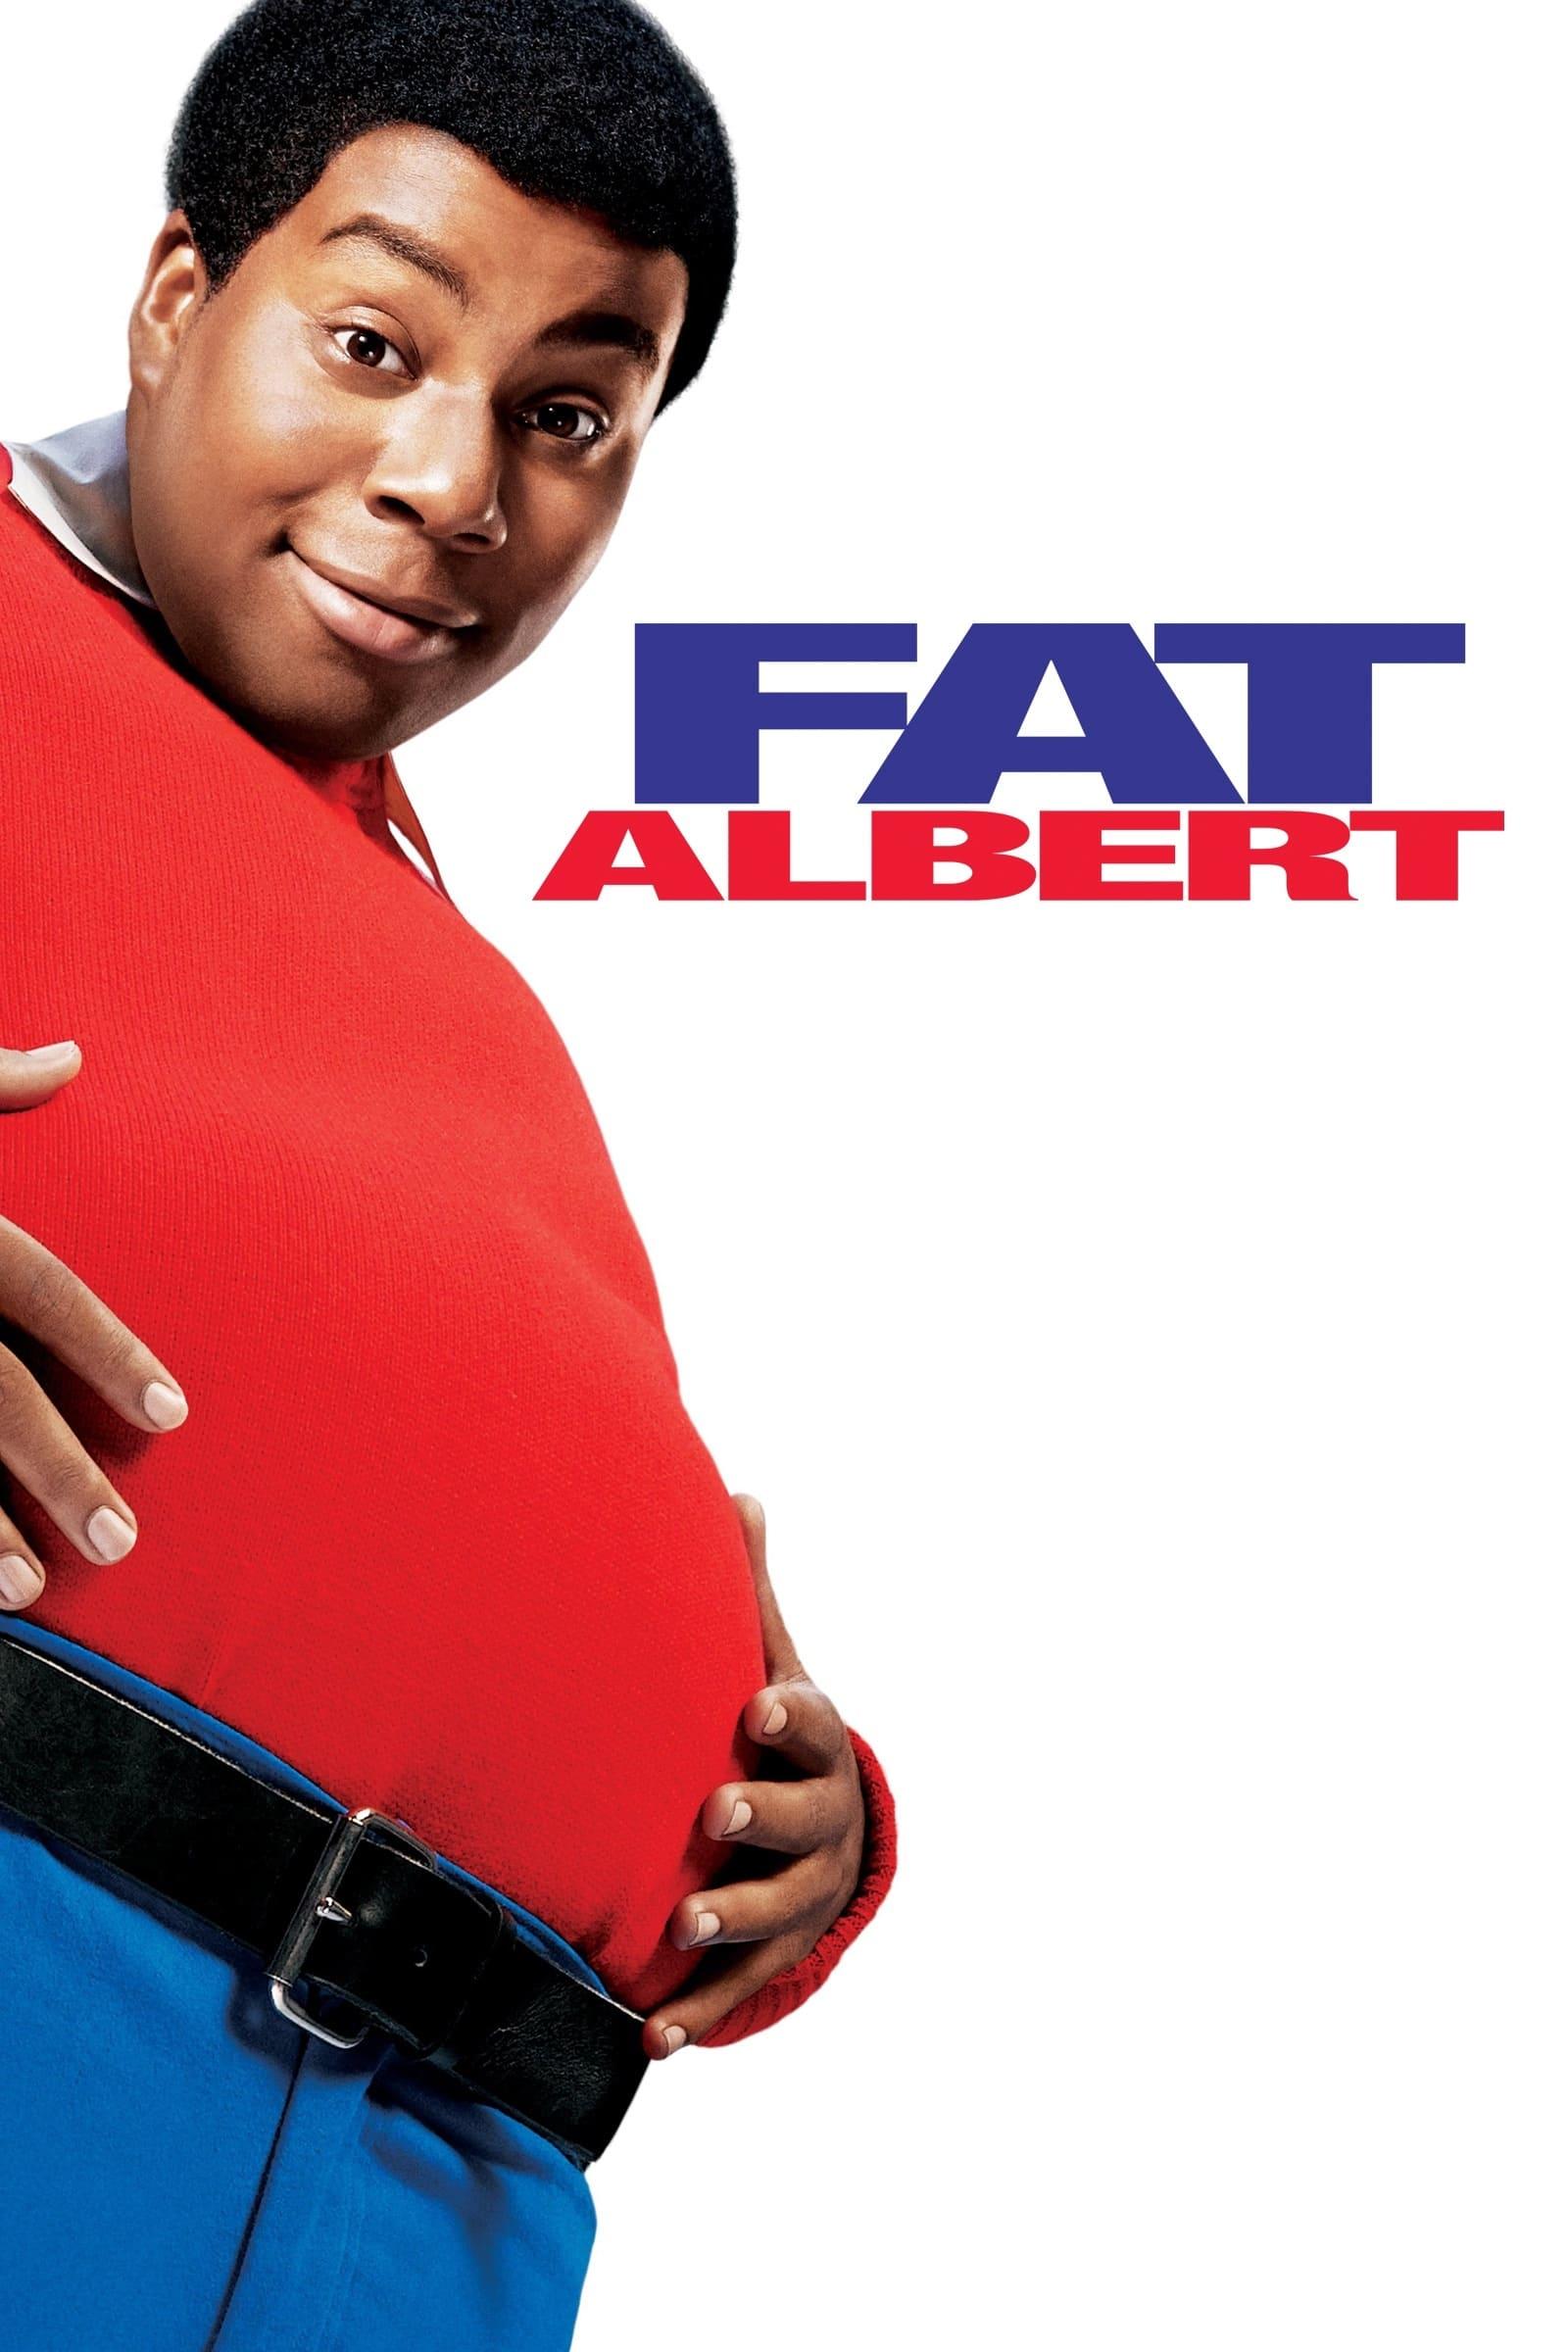 Fat Albert poster